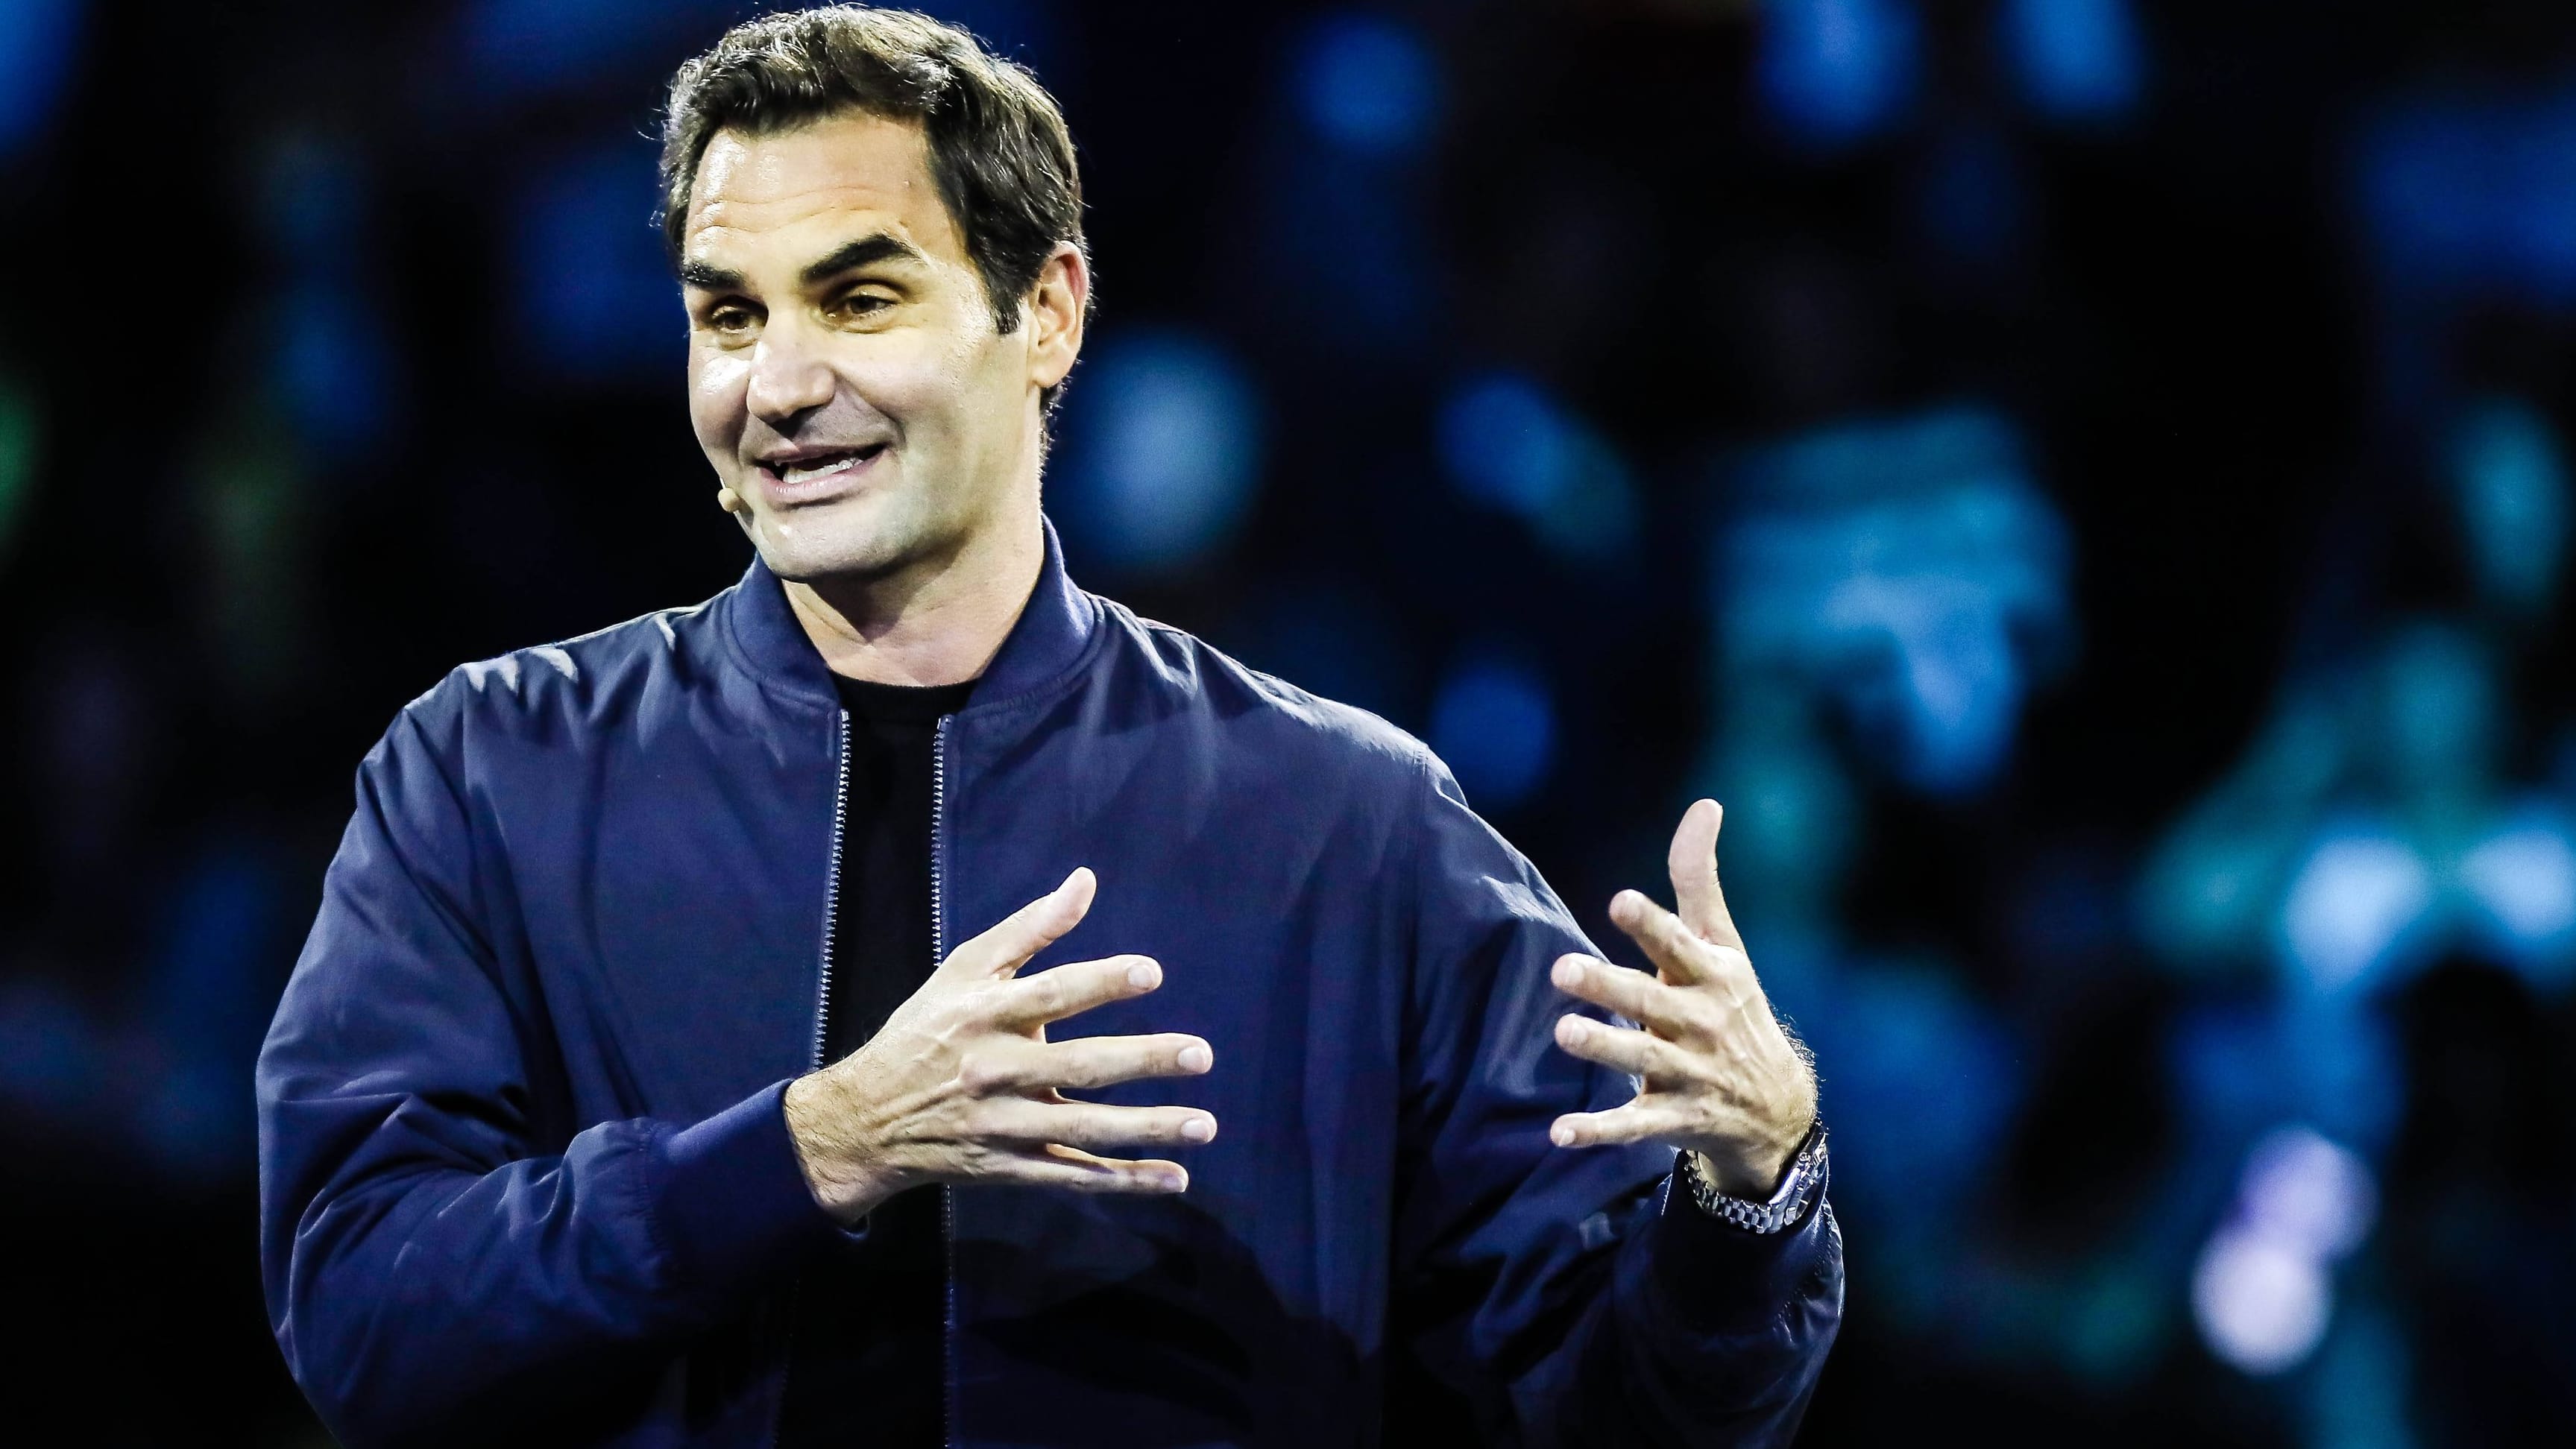 Tennis: Doku über Weltstar Roger Federer von Oscar-Preisträger angekündigt